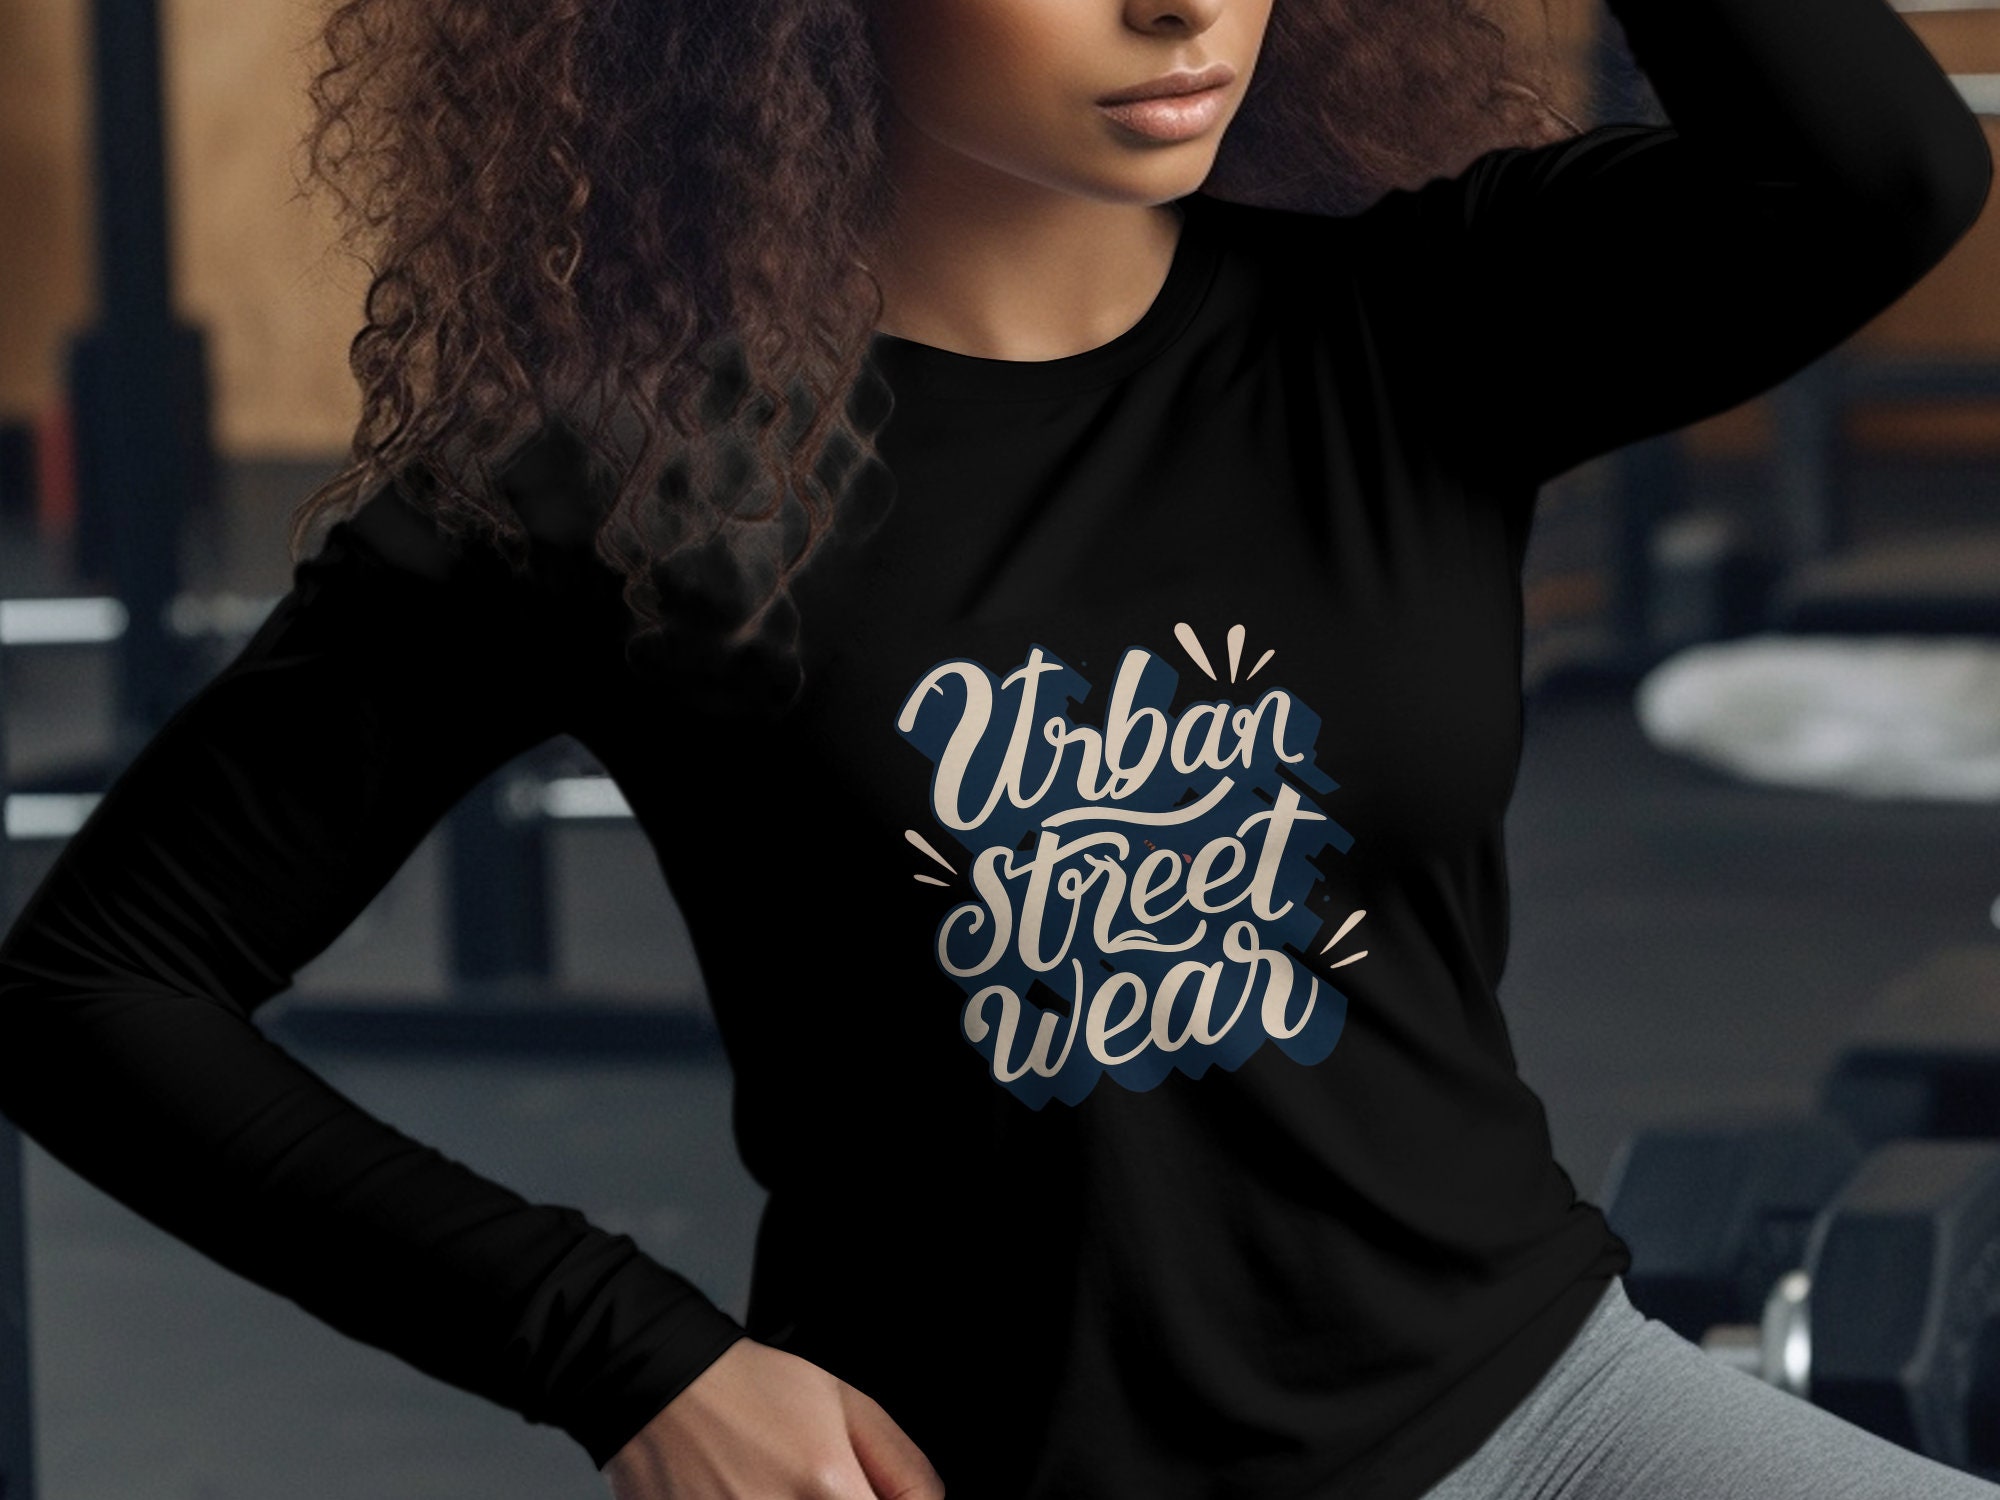 Urban Street Clothing